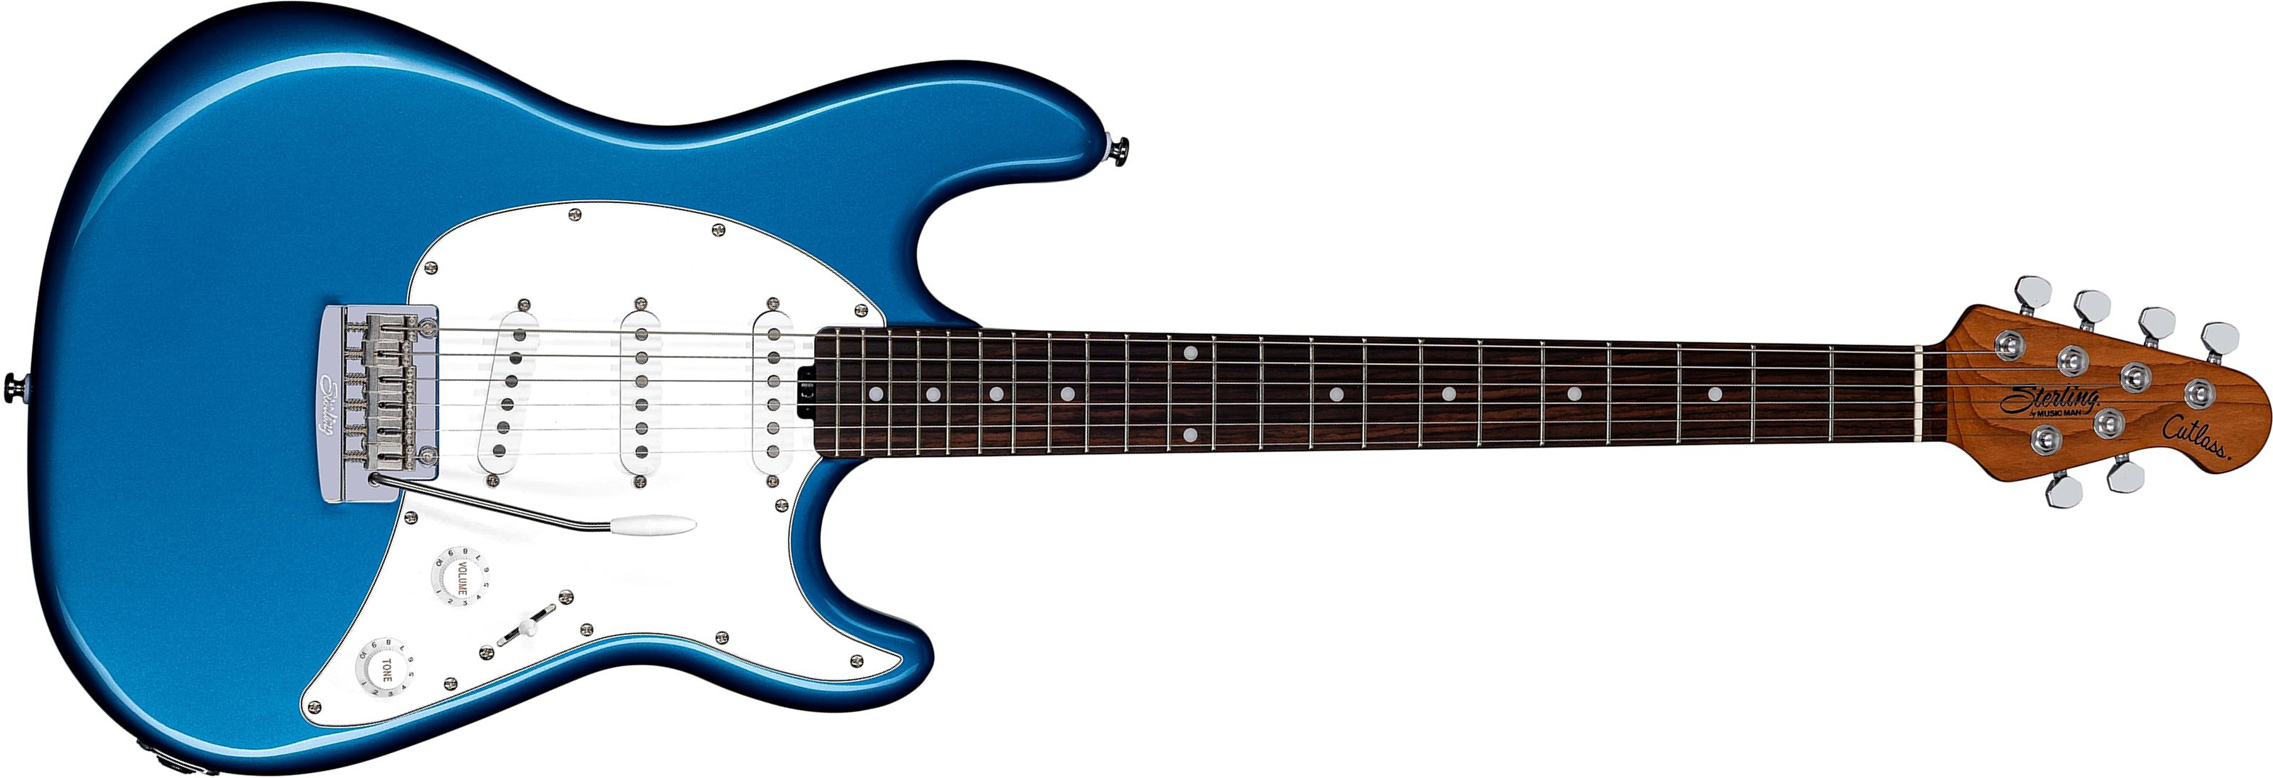 Sterling By Musicman Cutlass Ct50sss 3s Trem Rw - Toluca Lake Blue - Guitare Électrique Forme Str - Main picture